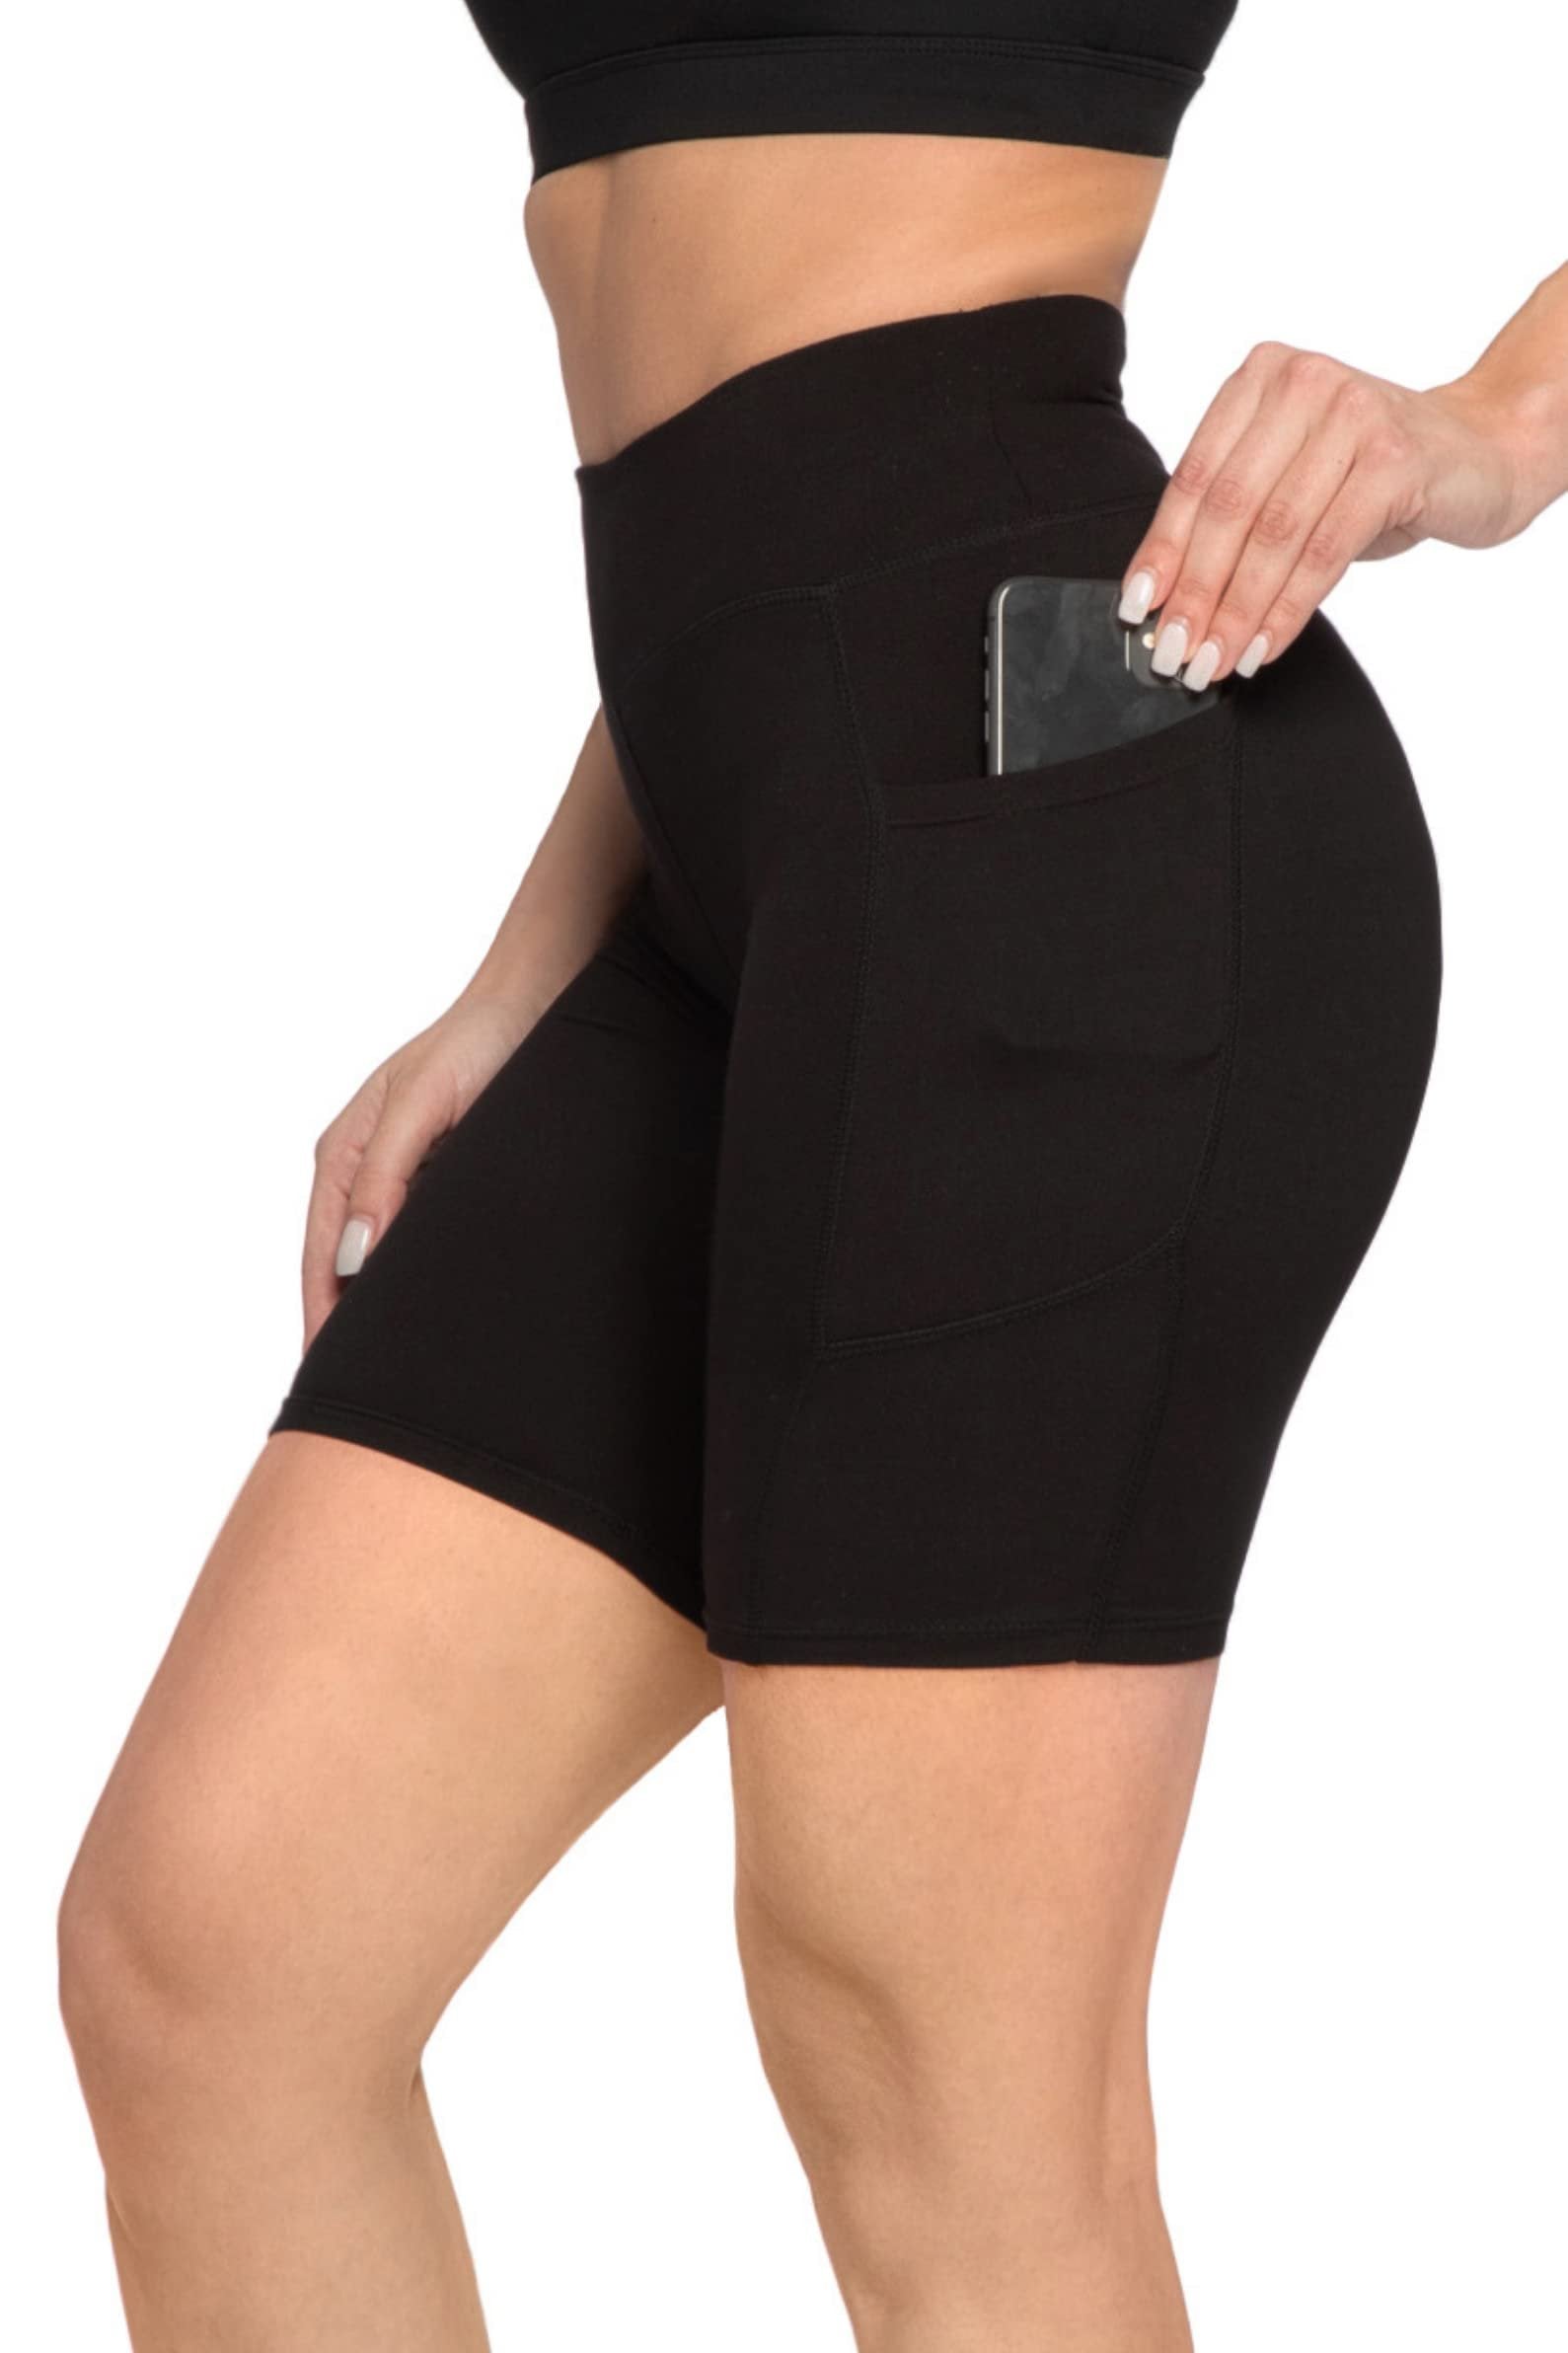 SATINA Biker Shorts for Women - High Waist Biker Shorts with Pockets - Yoga Shorts for Regular & Plus Size Women (8-Inch, XX-Large, Black Shorts)